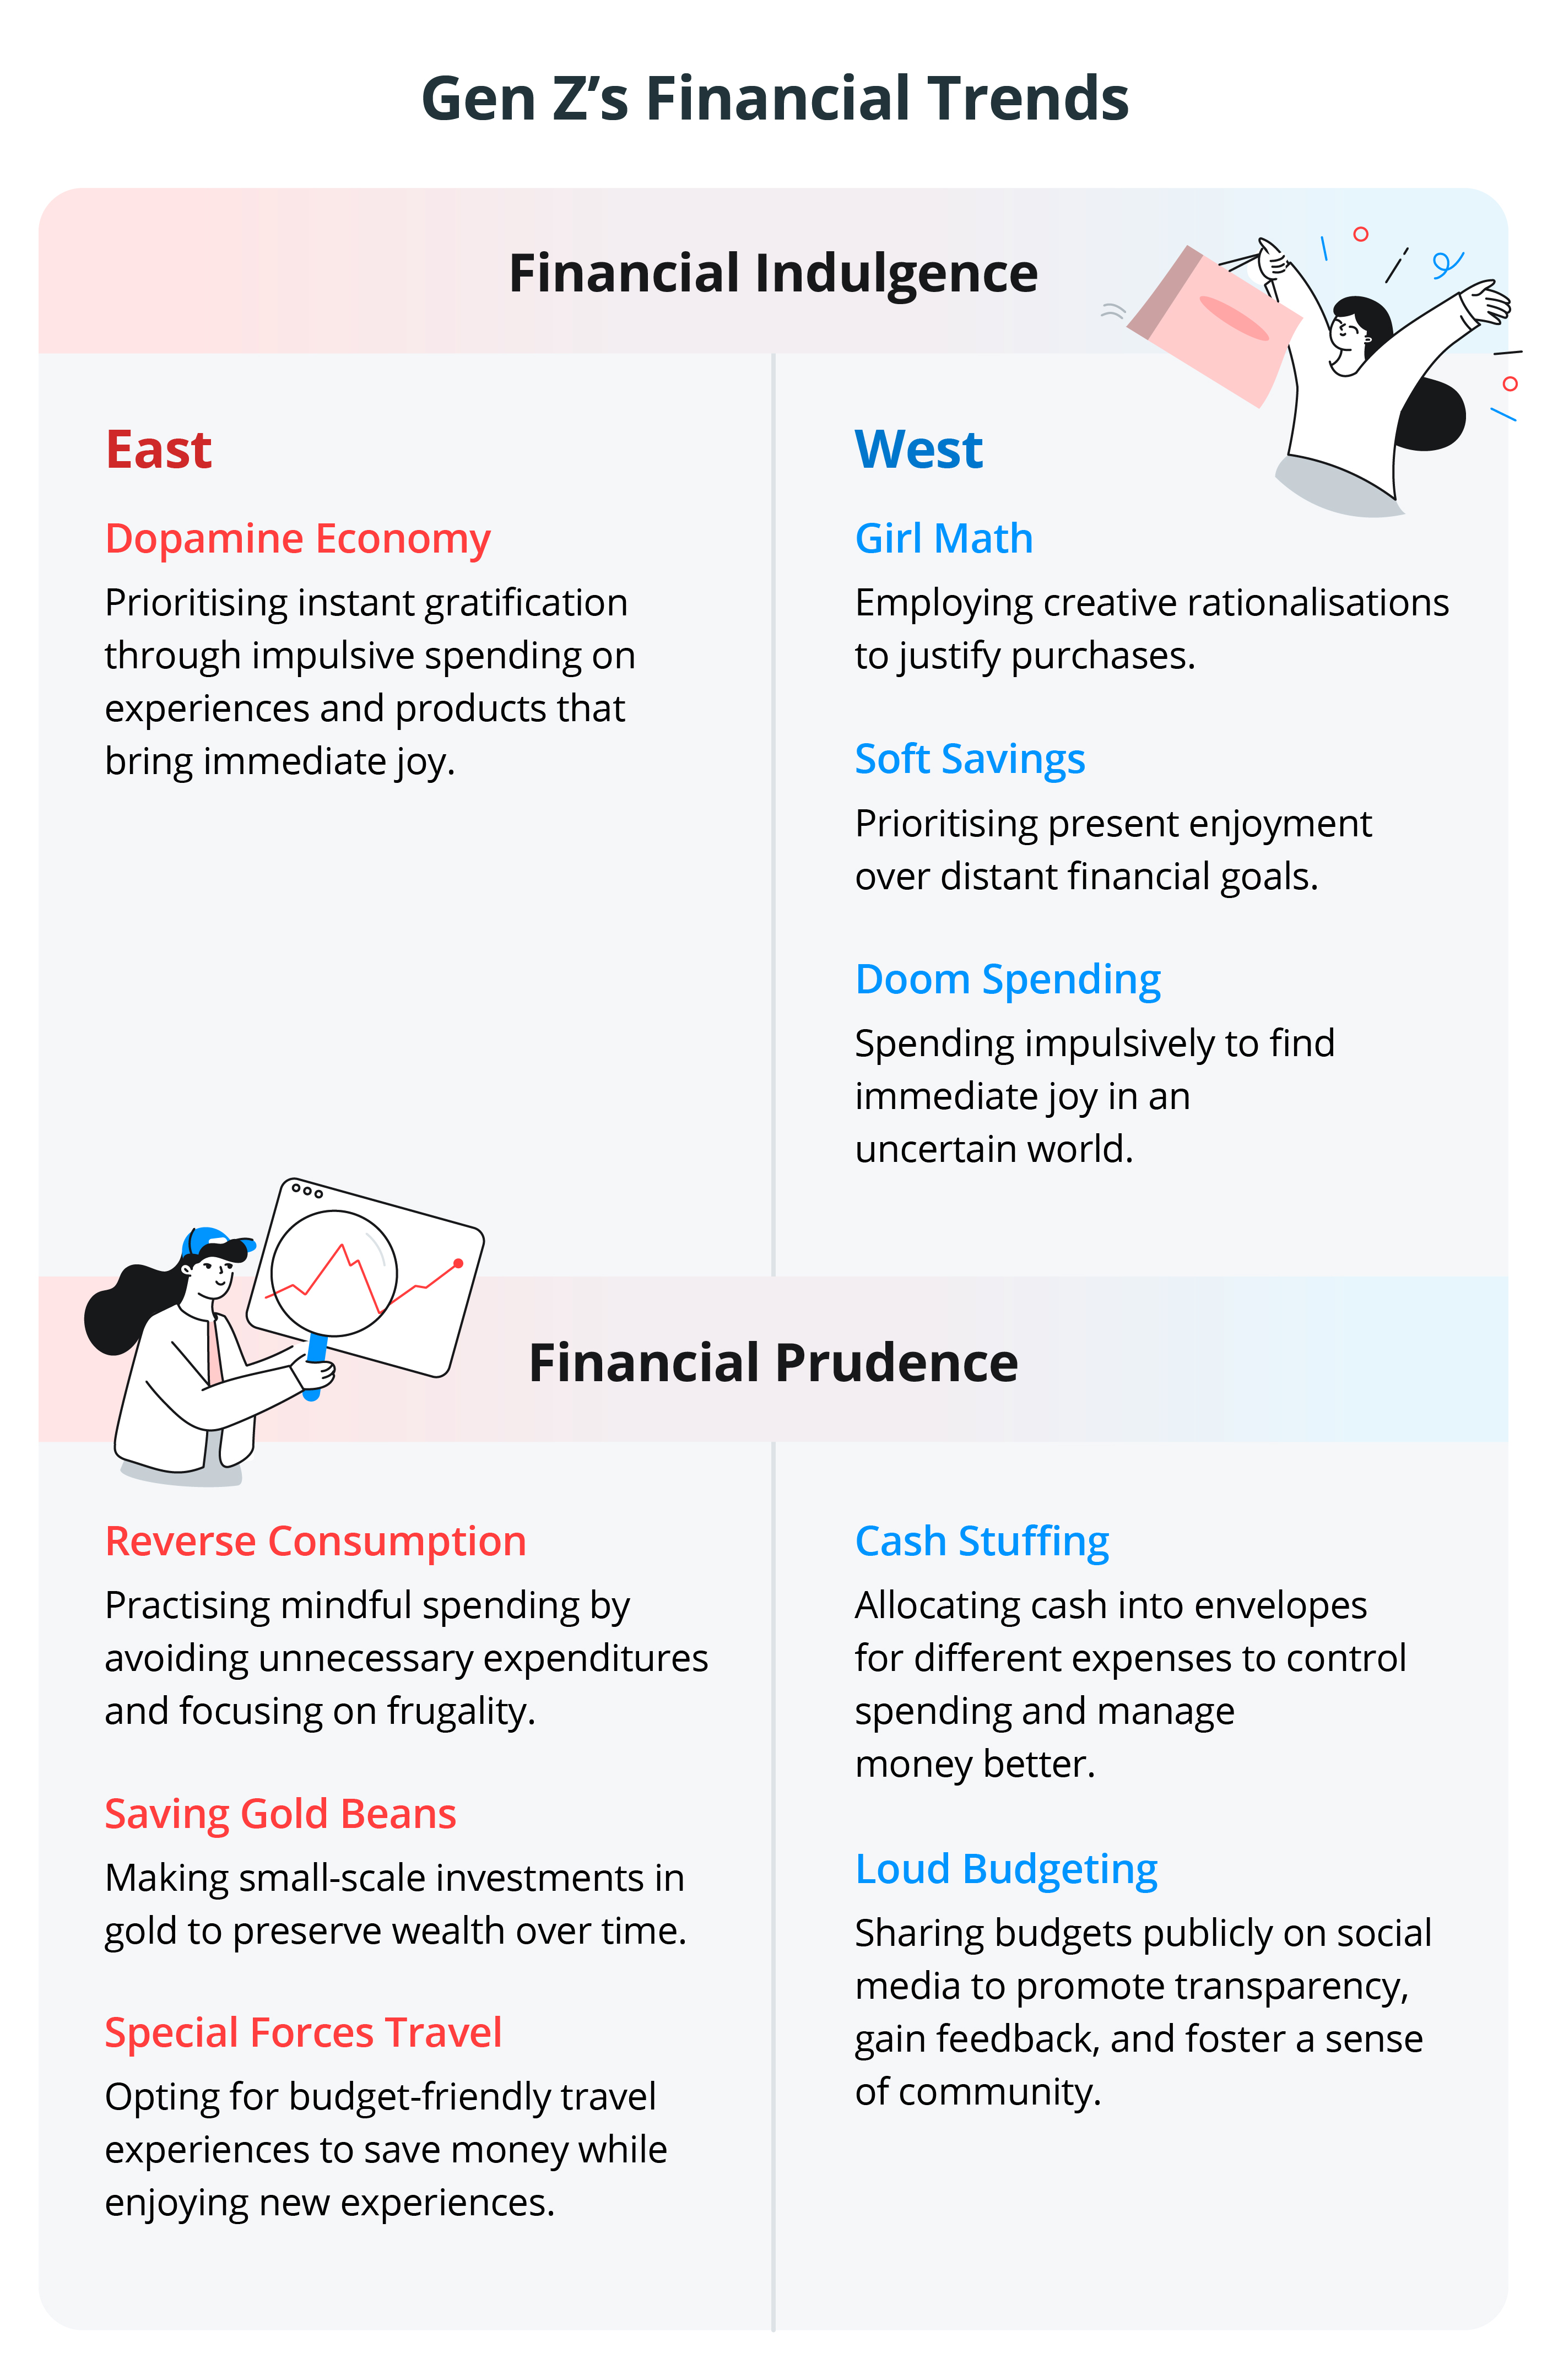 Generation Z's financial trends: East vs West 